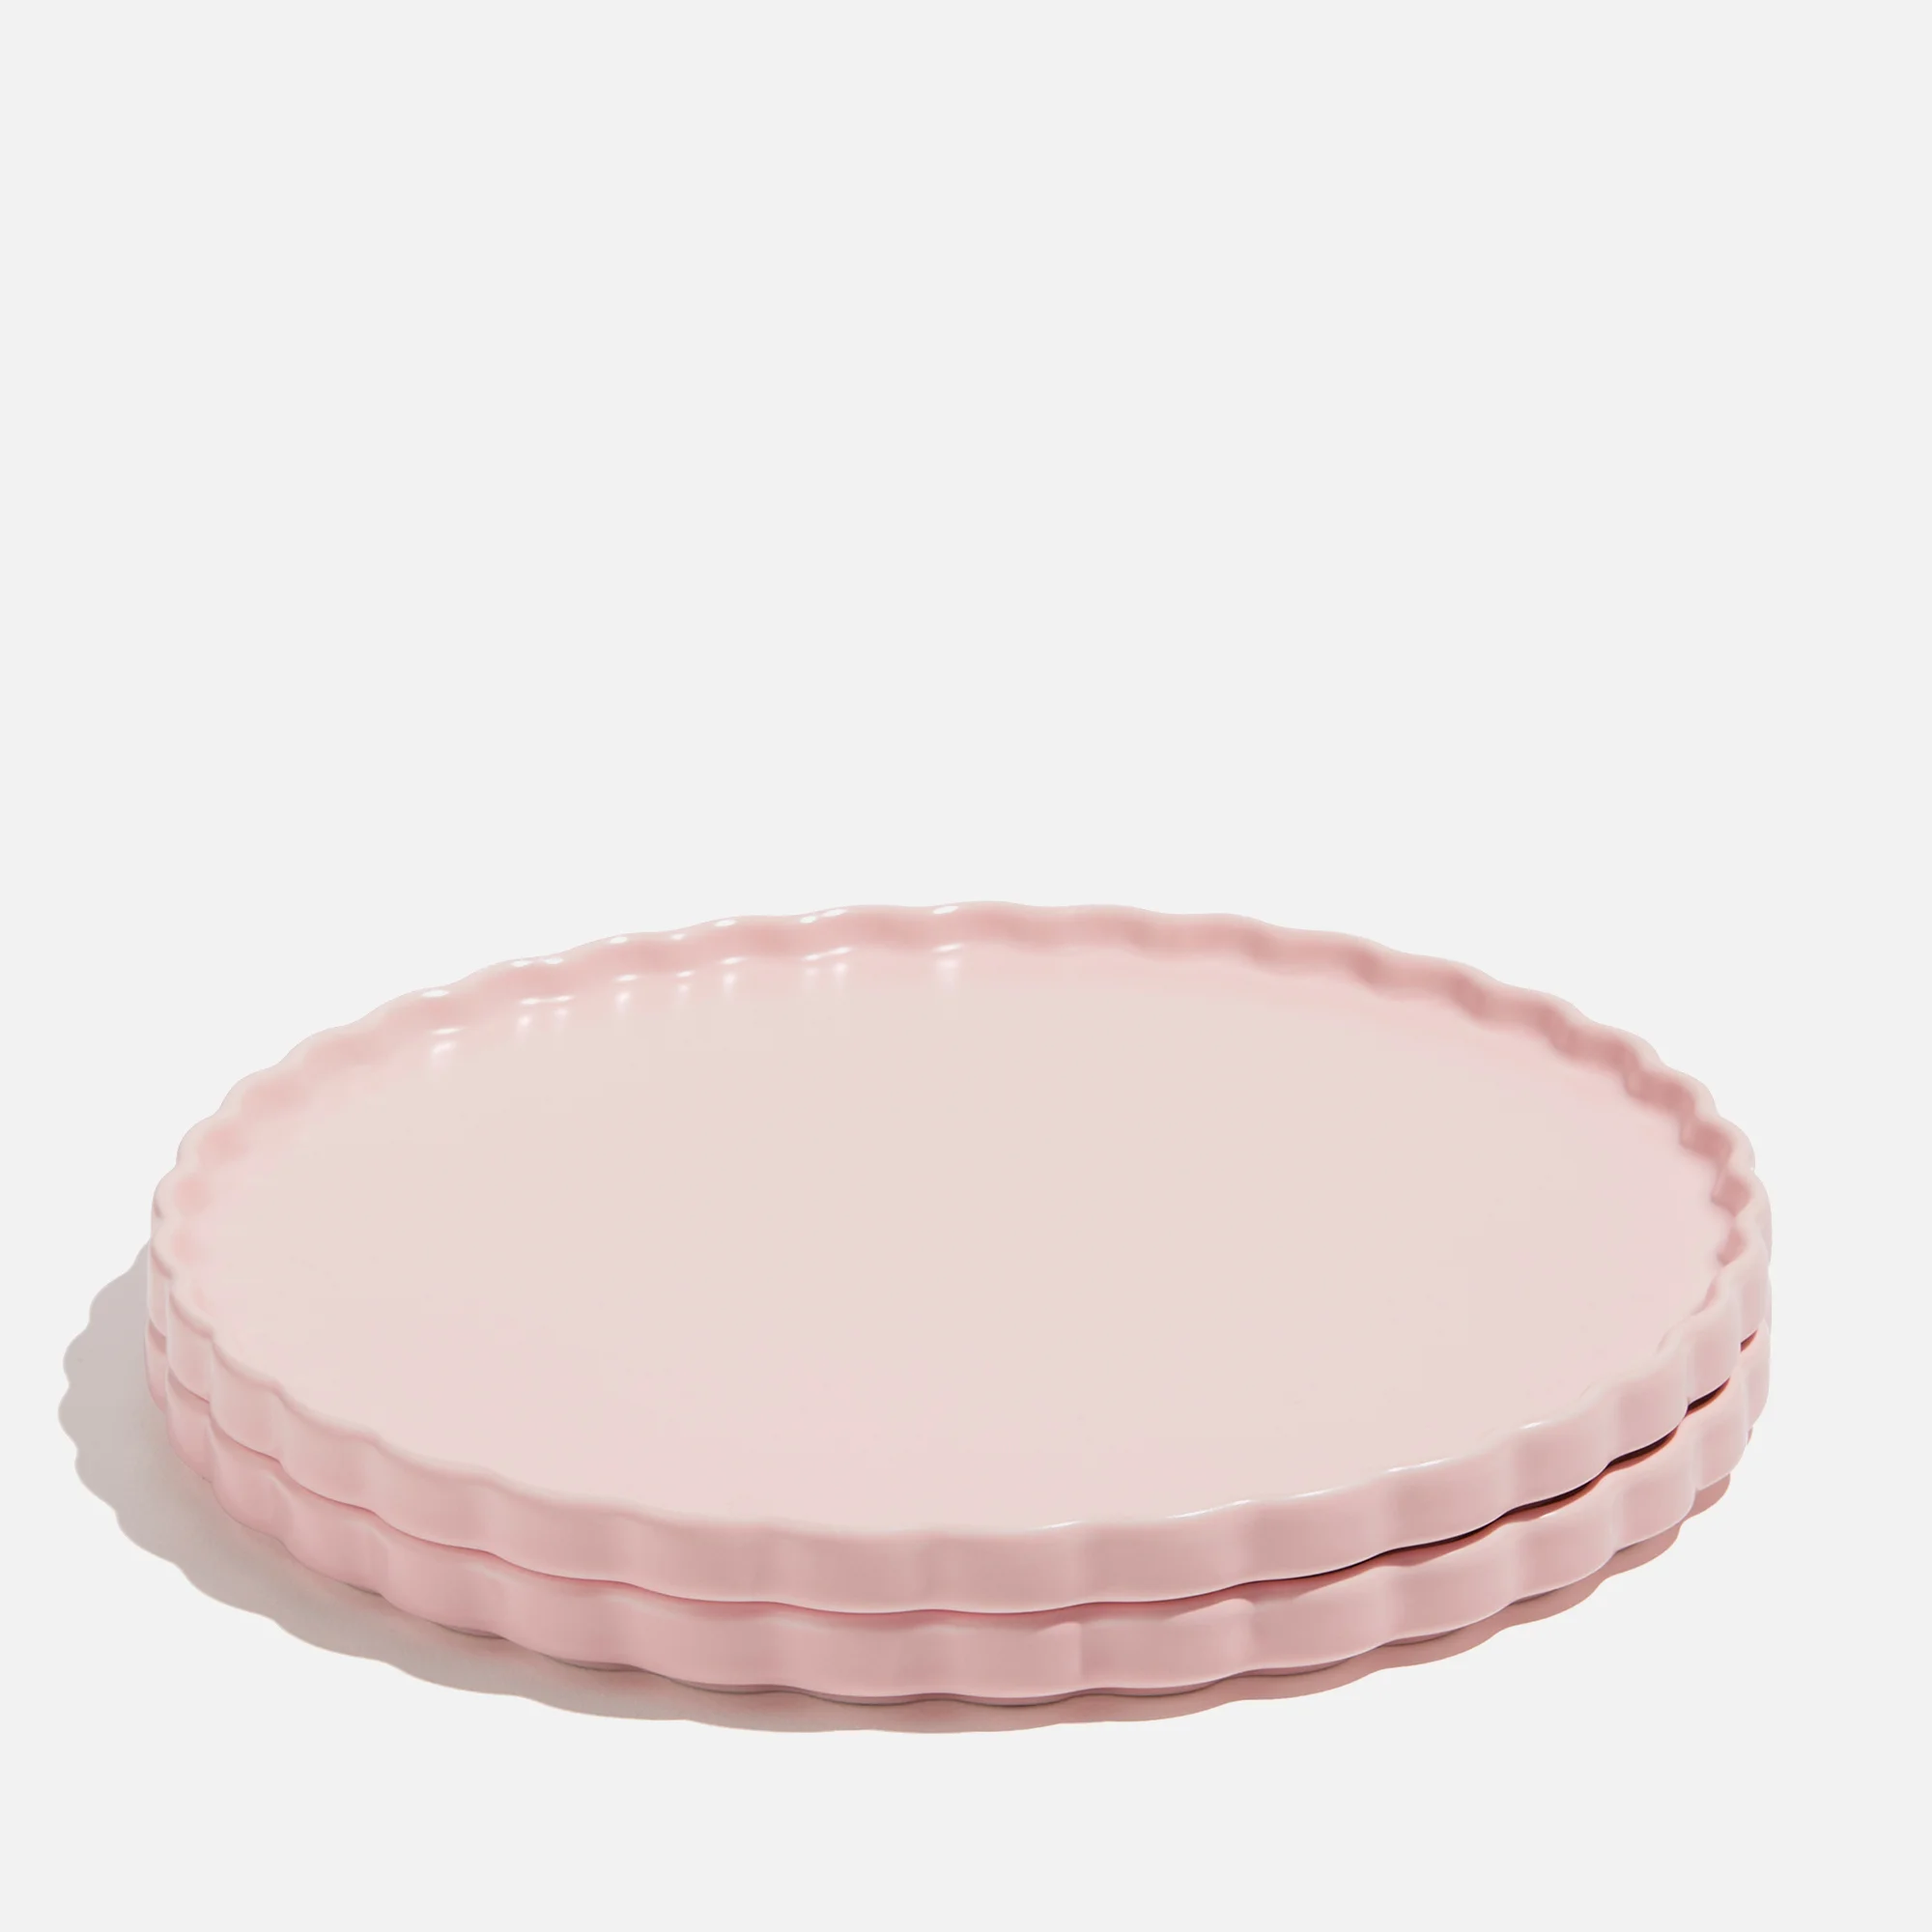 Fazeek Ceramic Dinner Plate - Set of 2 Pink Image 1